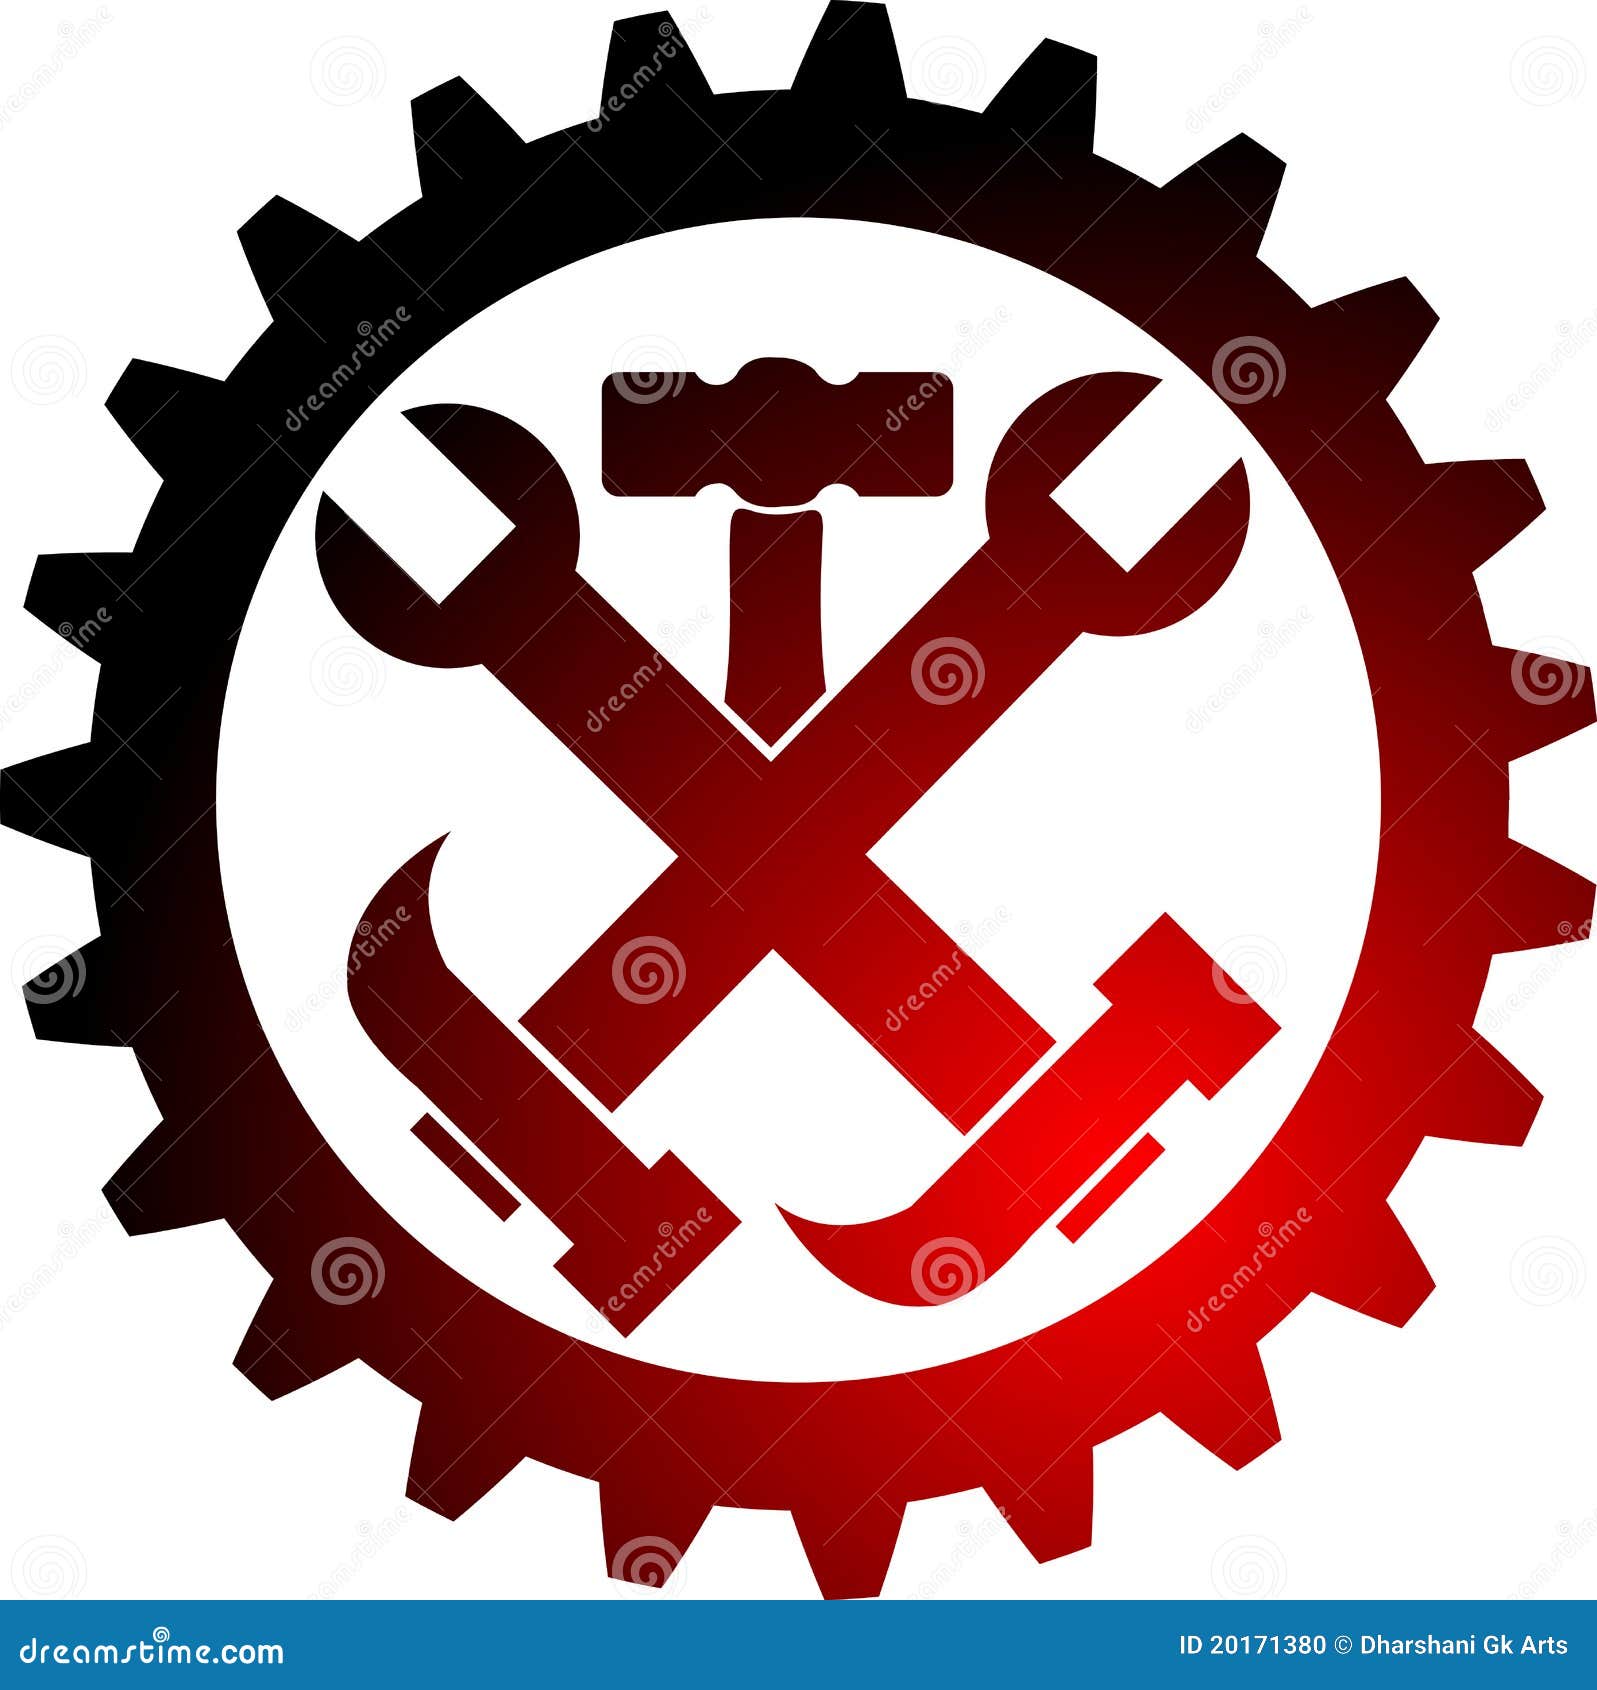 tool gear logo